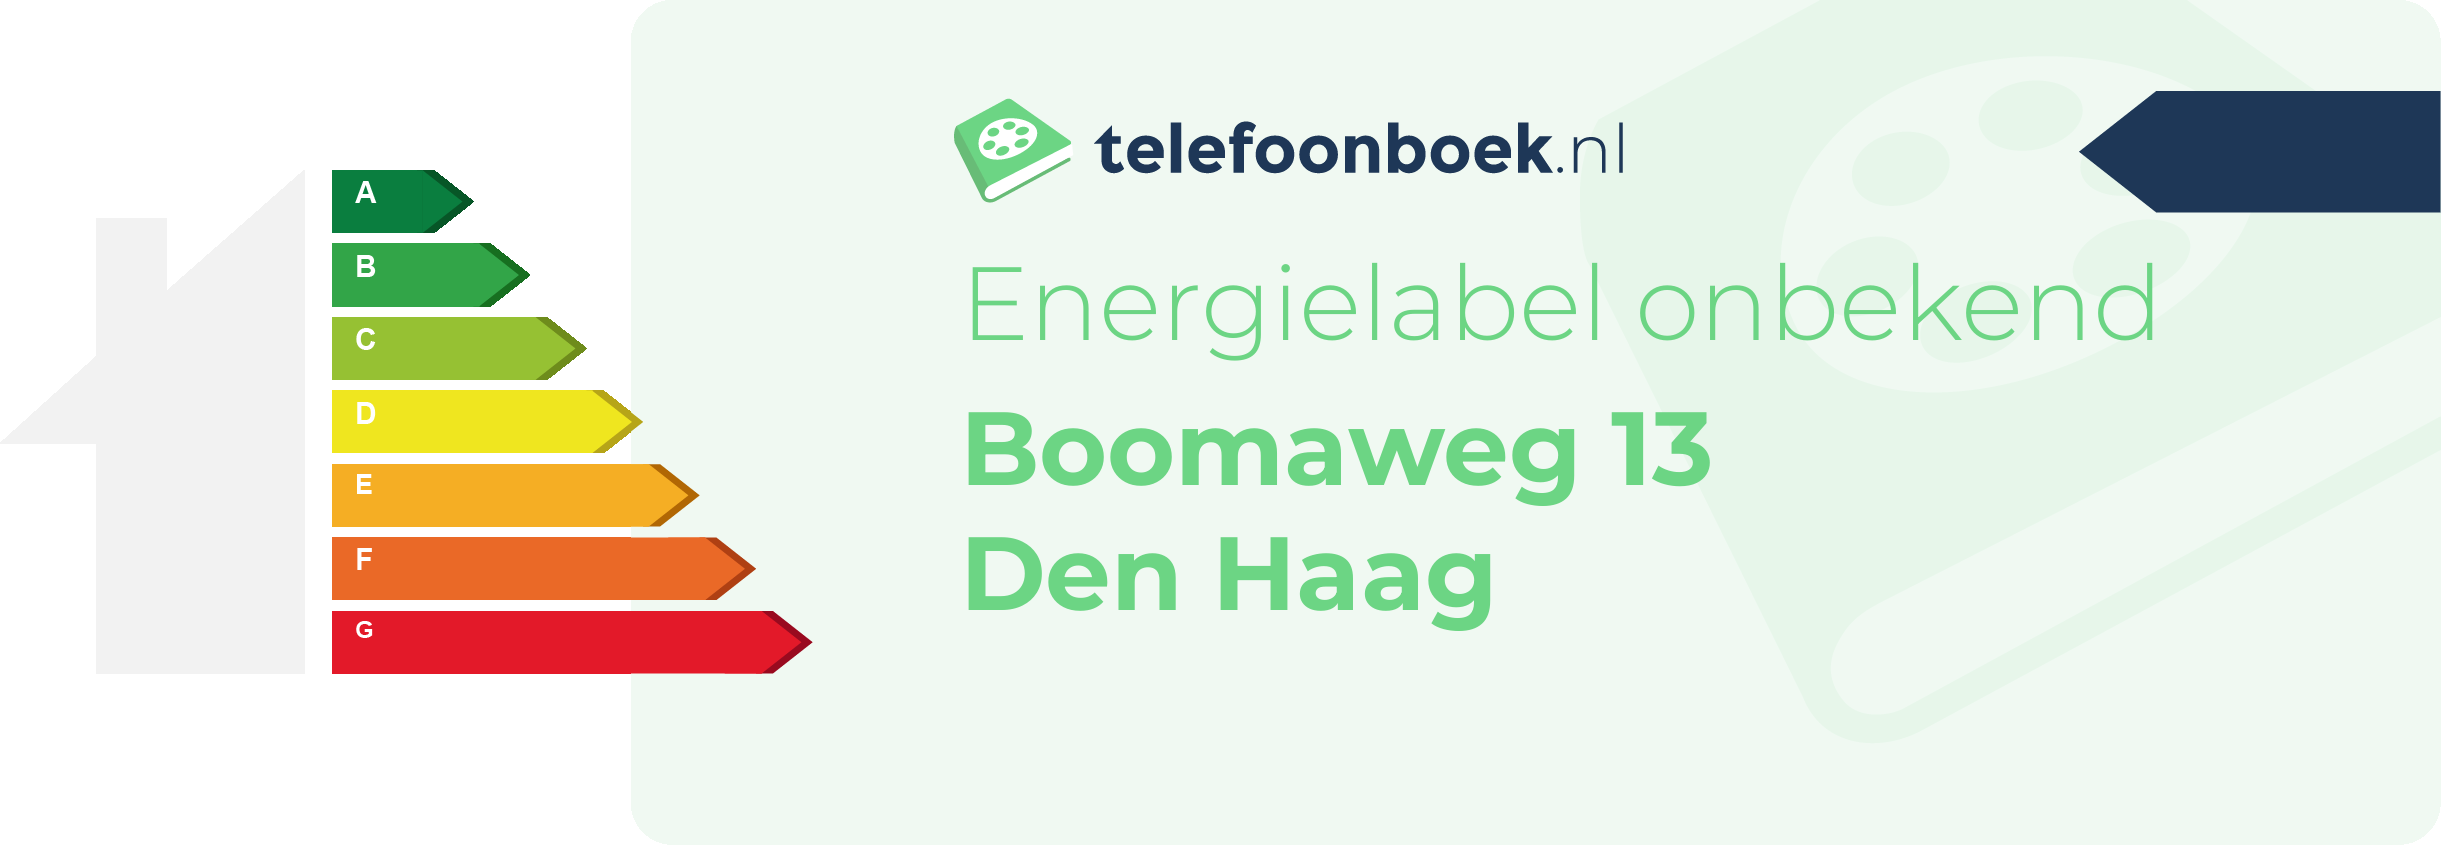 Energielabel Boomaweg 13 Den Haag